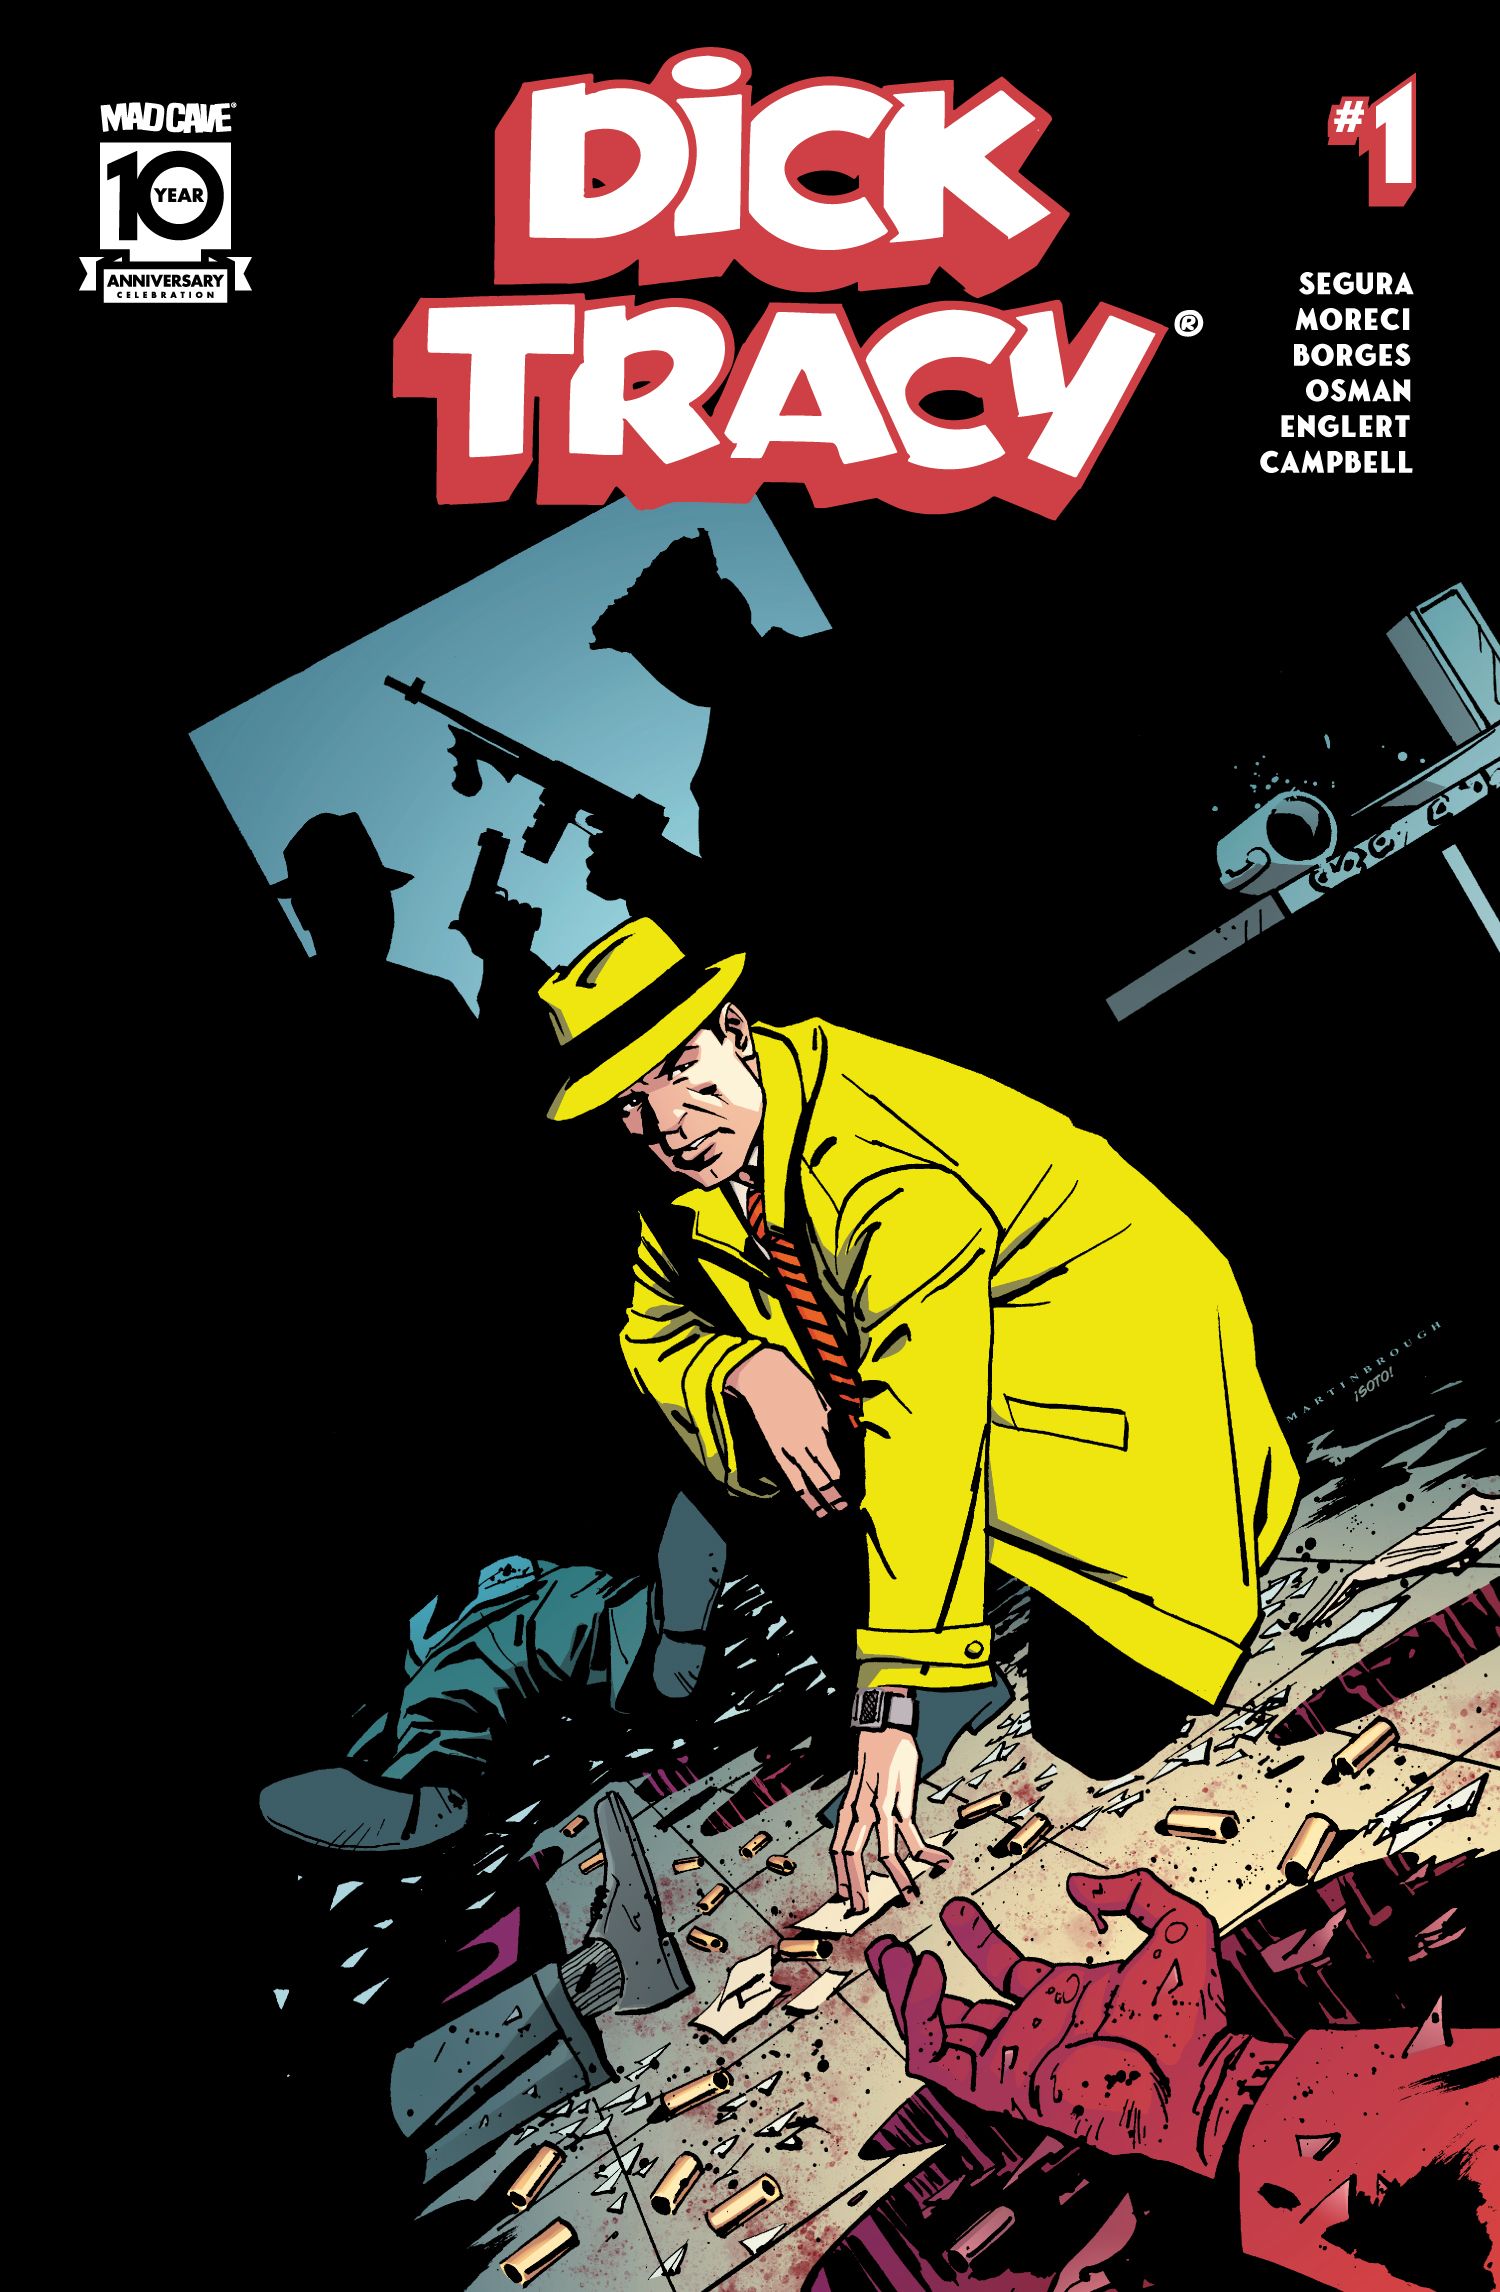 Dick Tracy #1 (Cvr C Shawn Martinbrough & Chris Sotomayor Variant) Comic